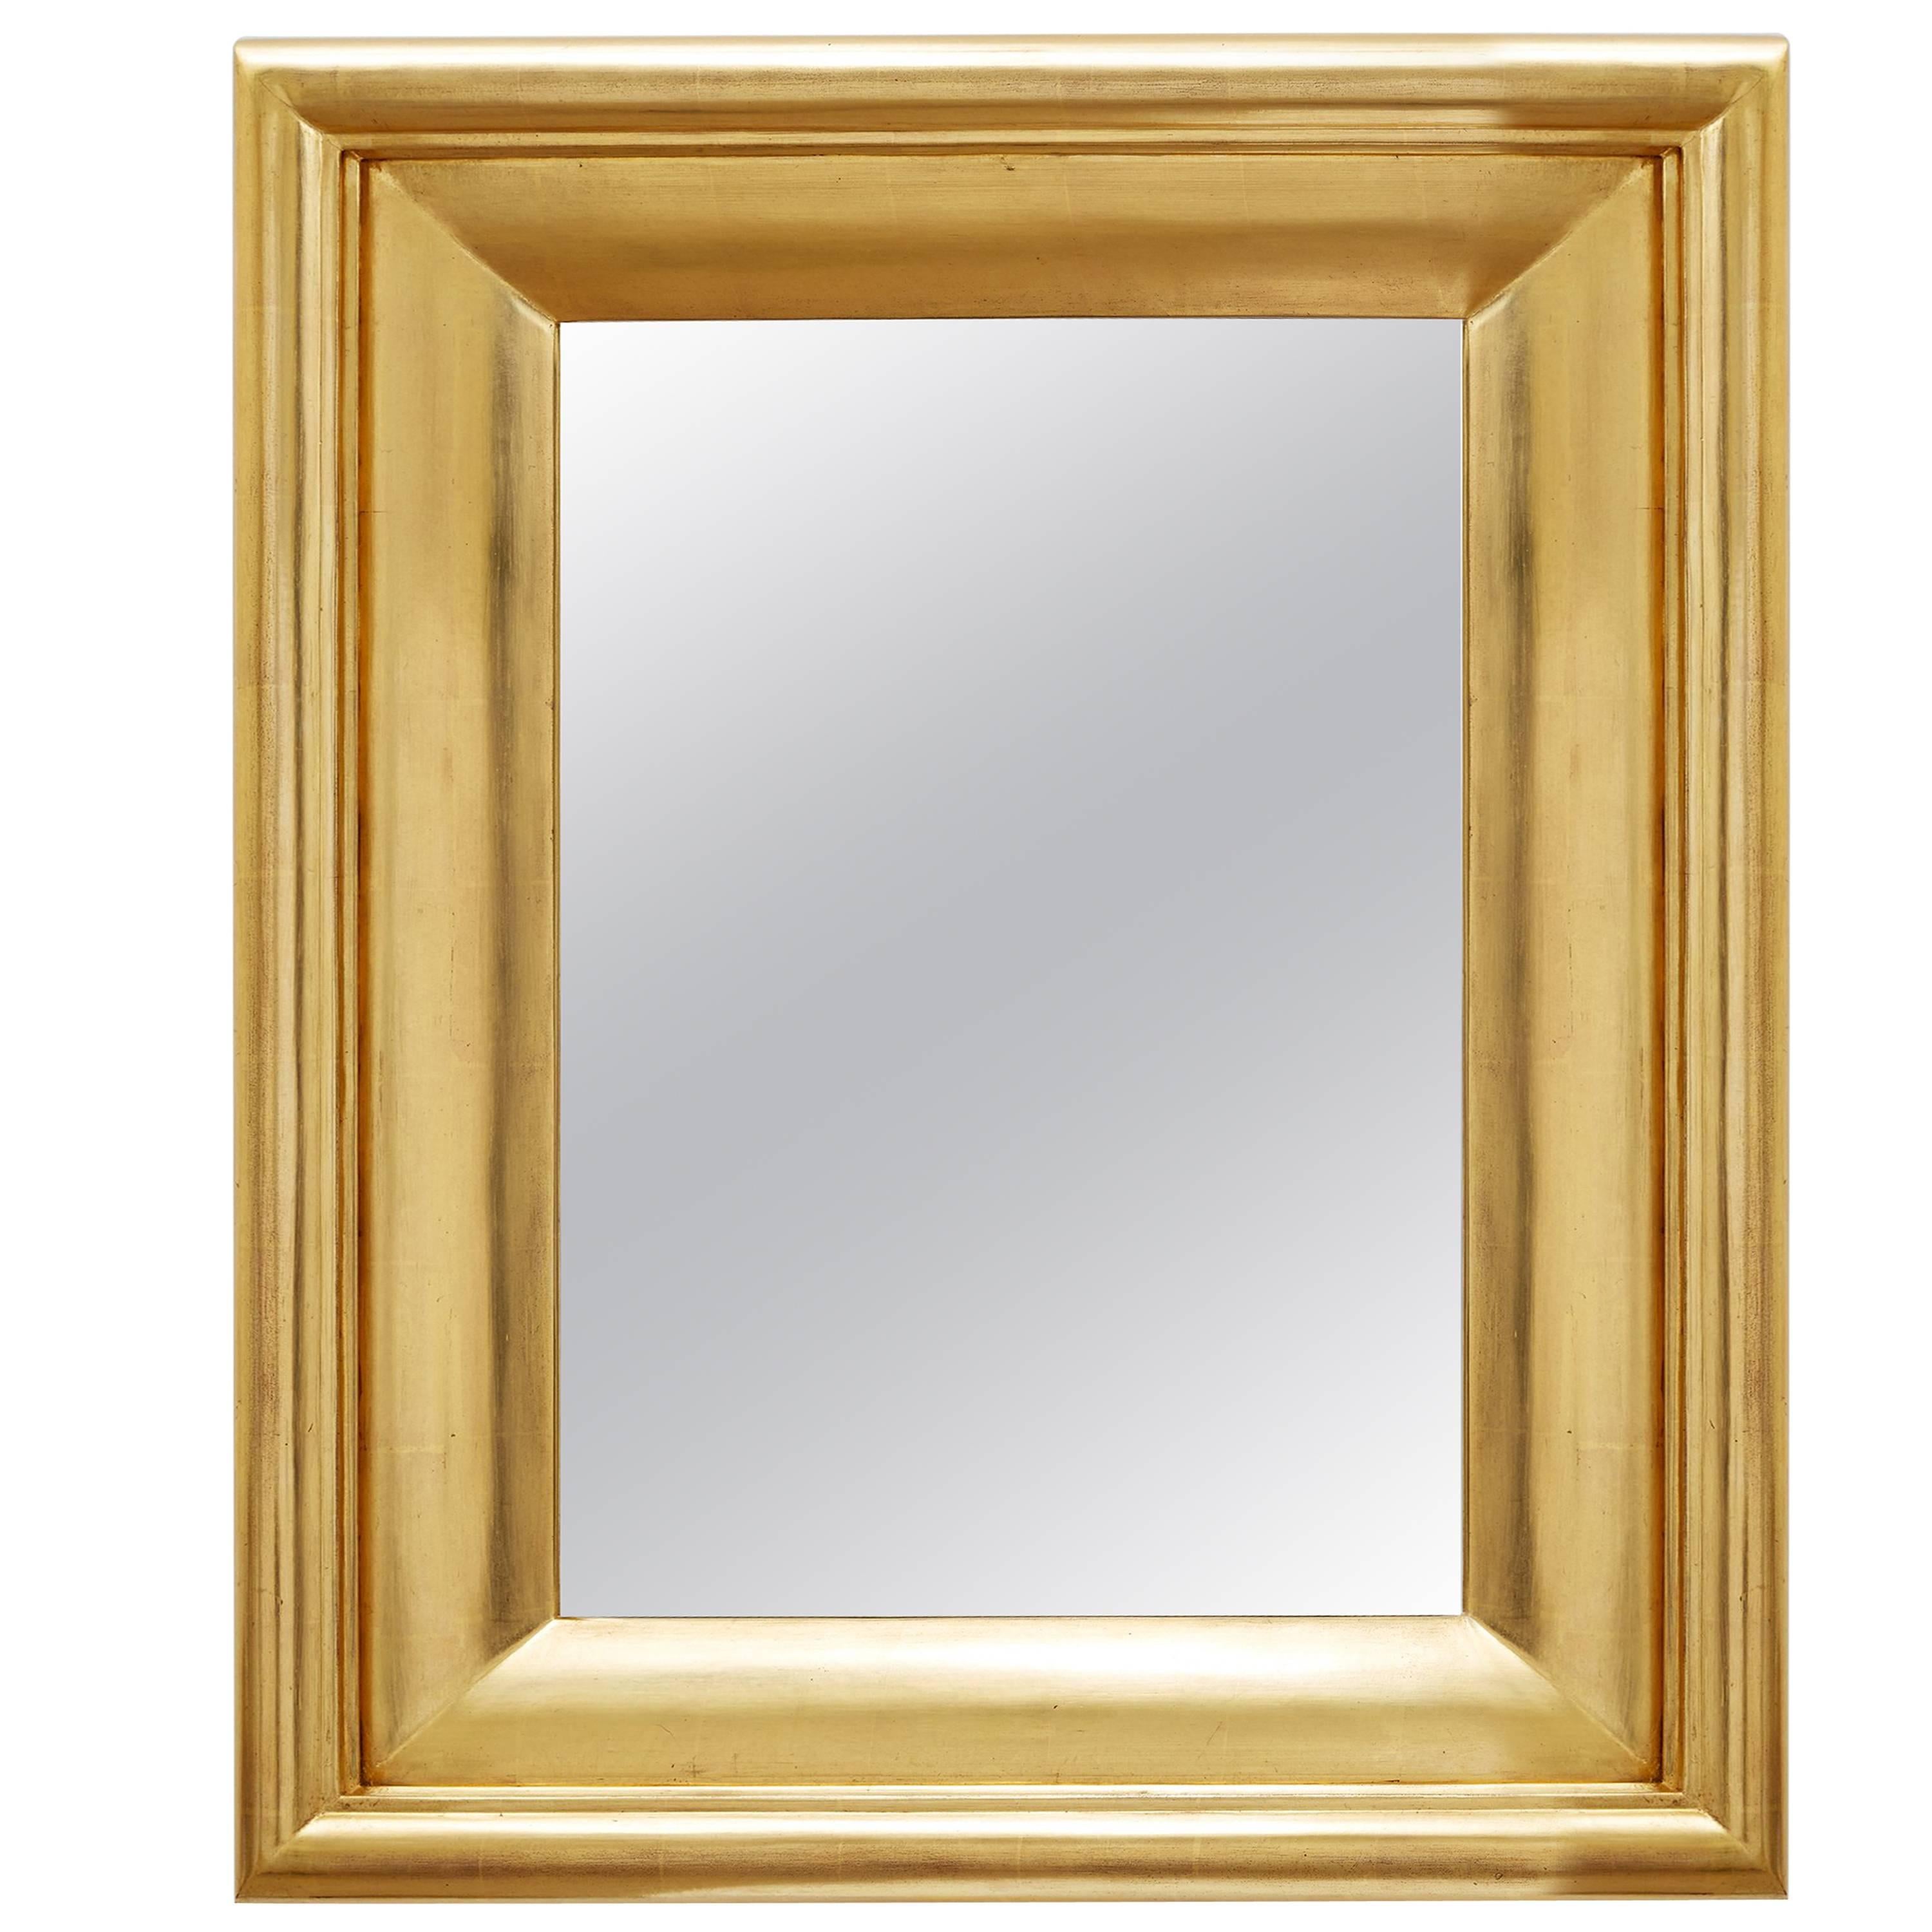 Degas No. 5 Modern Wall Mirror, Gilded in 23-Karat Yellow Gold, Bark Frameworks For Sale